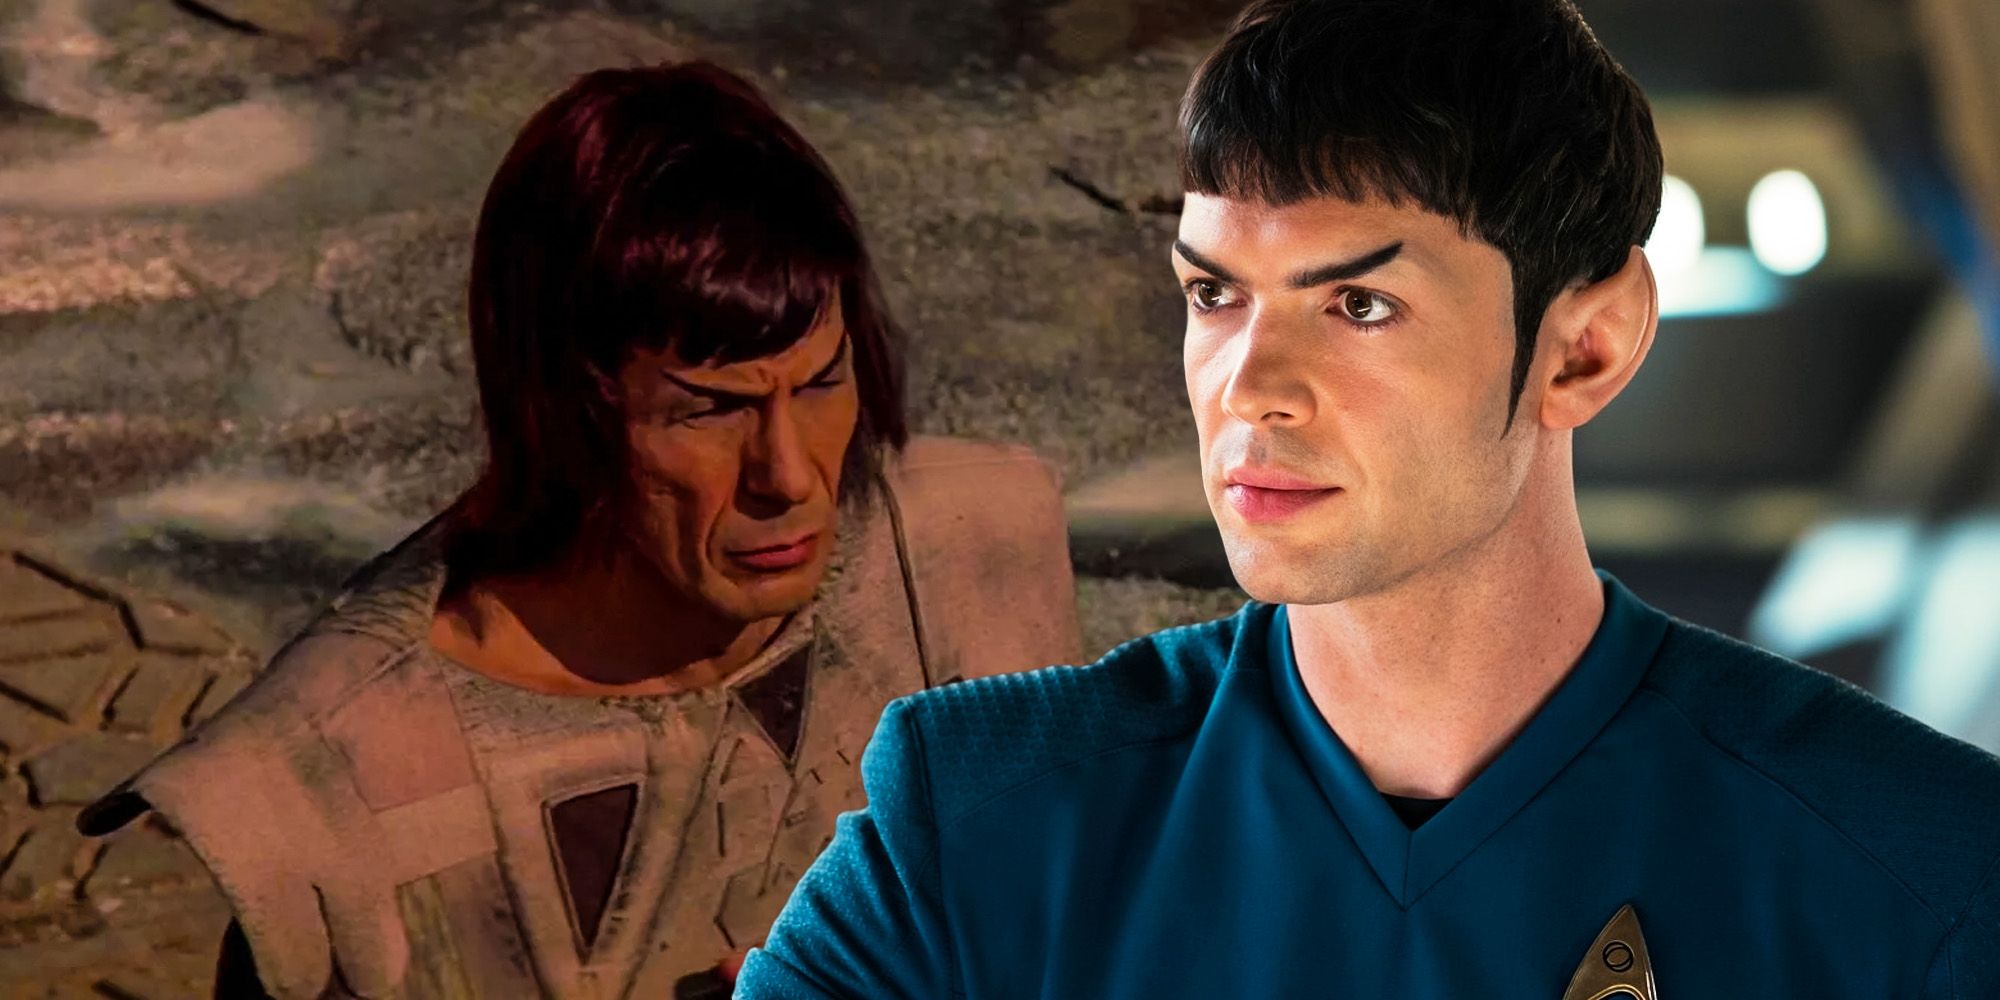 Star Trek Strange new worlds Sets Up Spocks First Star Trek Movie Story